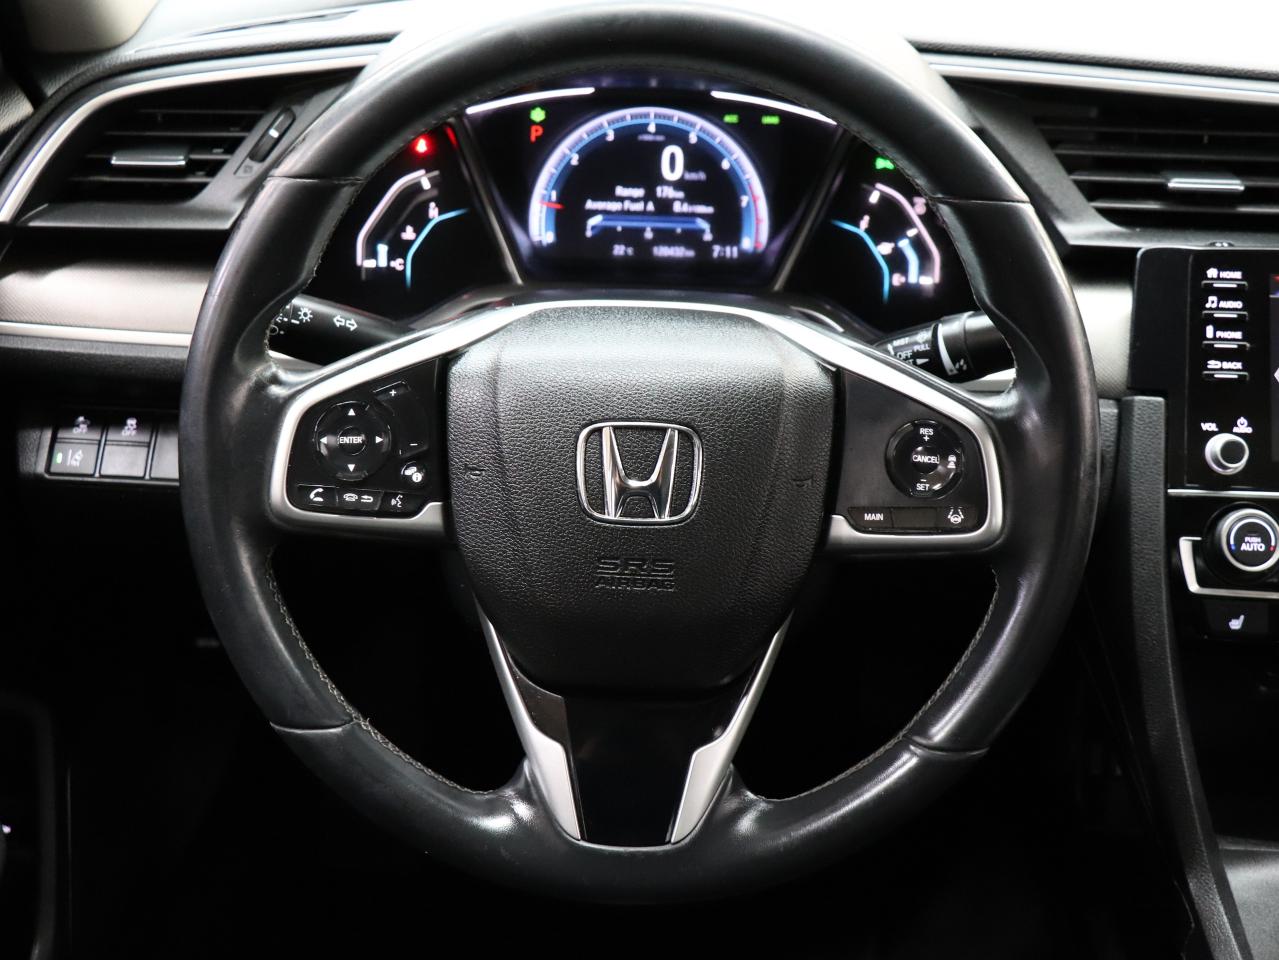 2021 Honda Civic EX | Sunroof | LaneWatch | HondaSensing | CarPlay